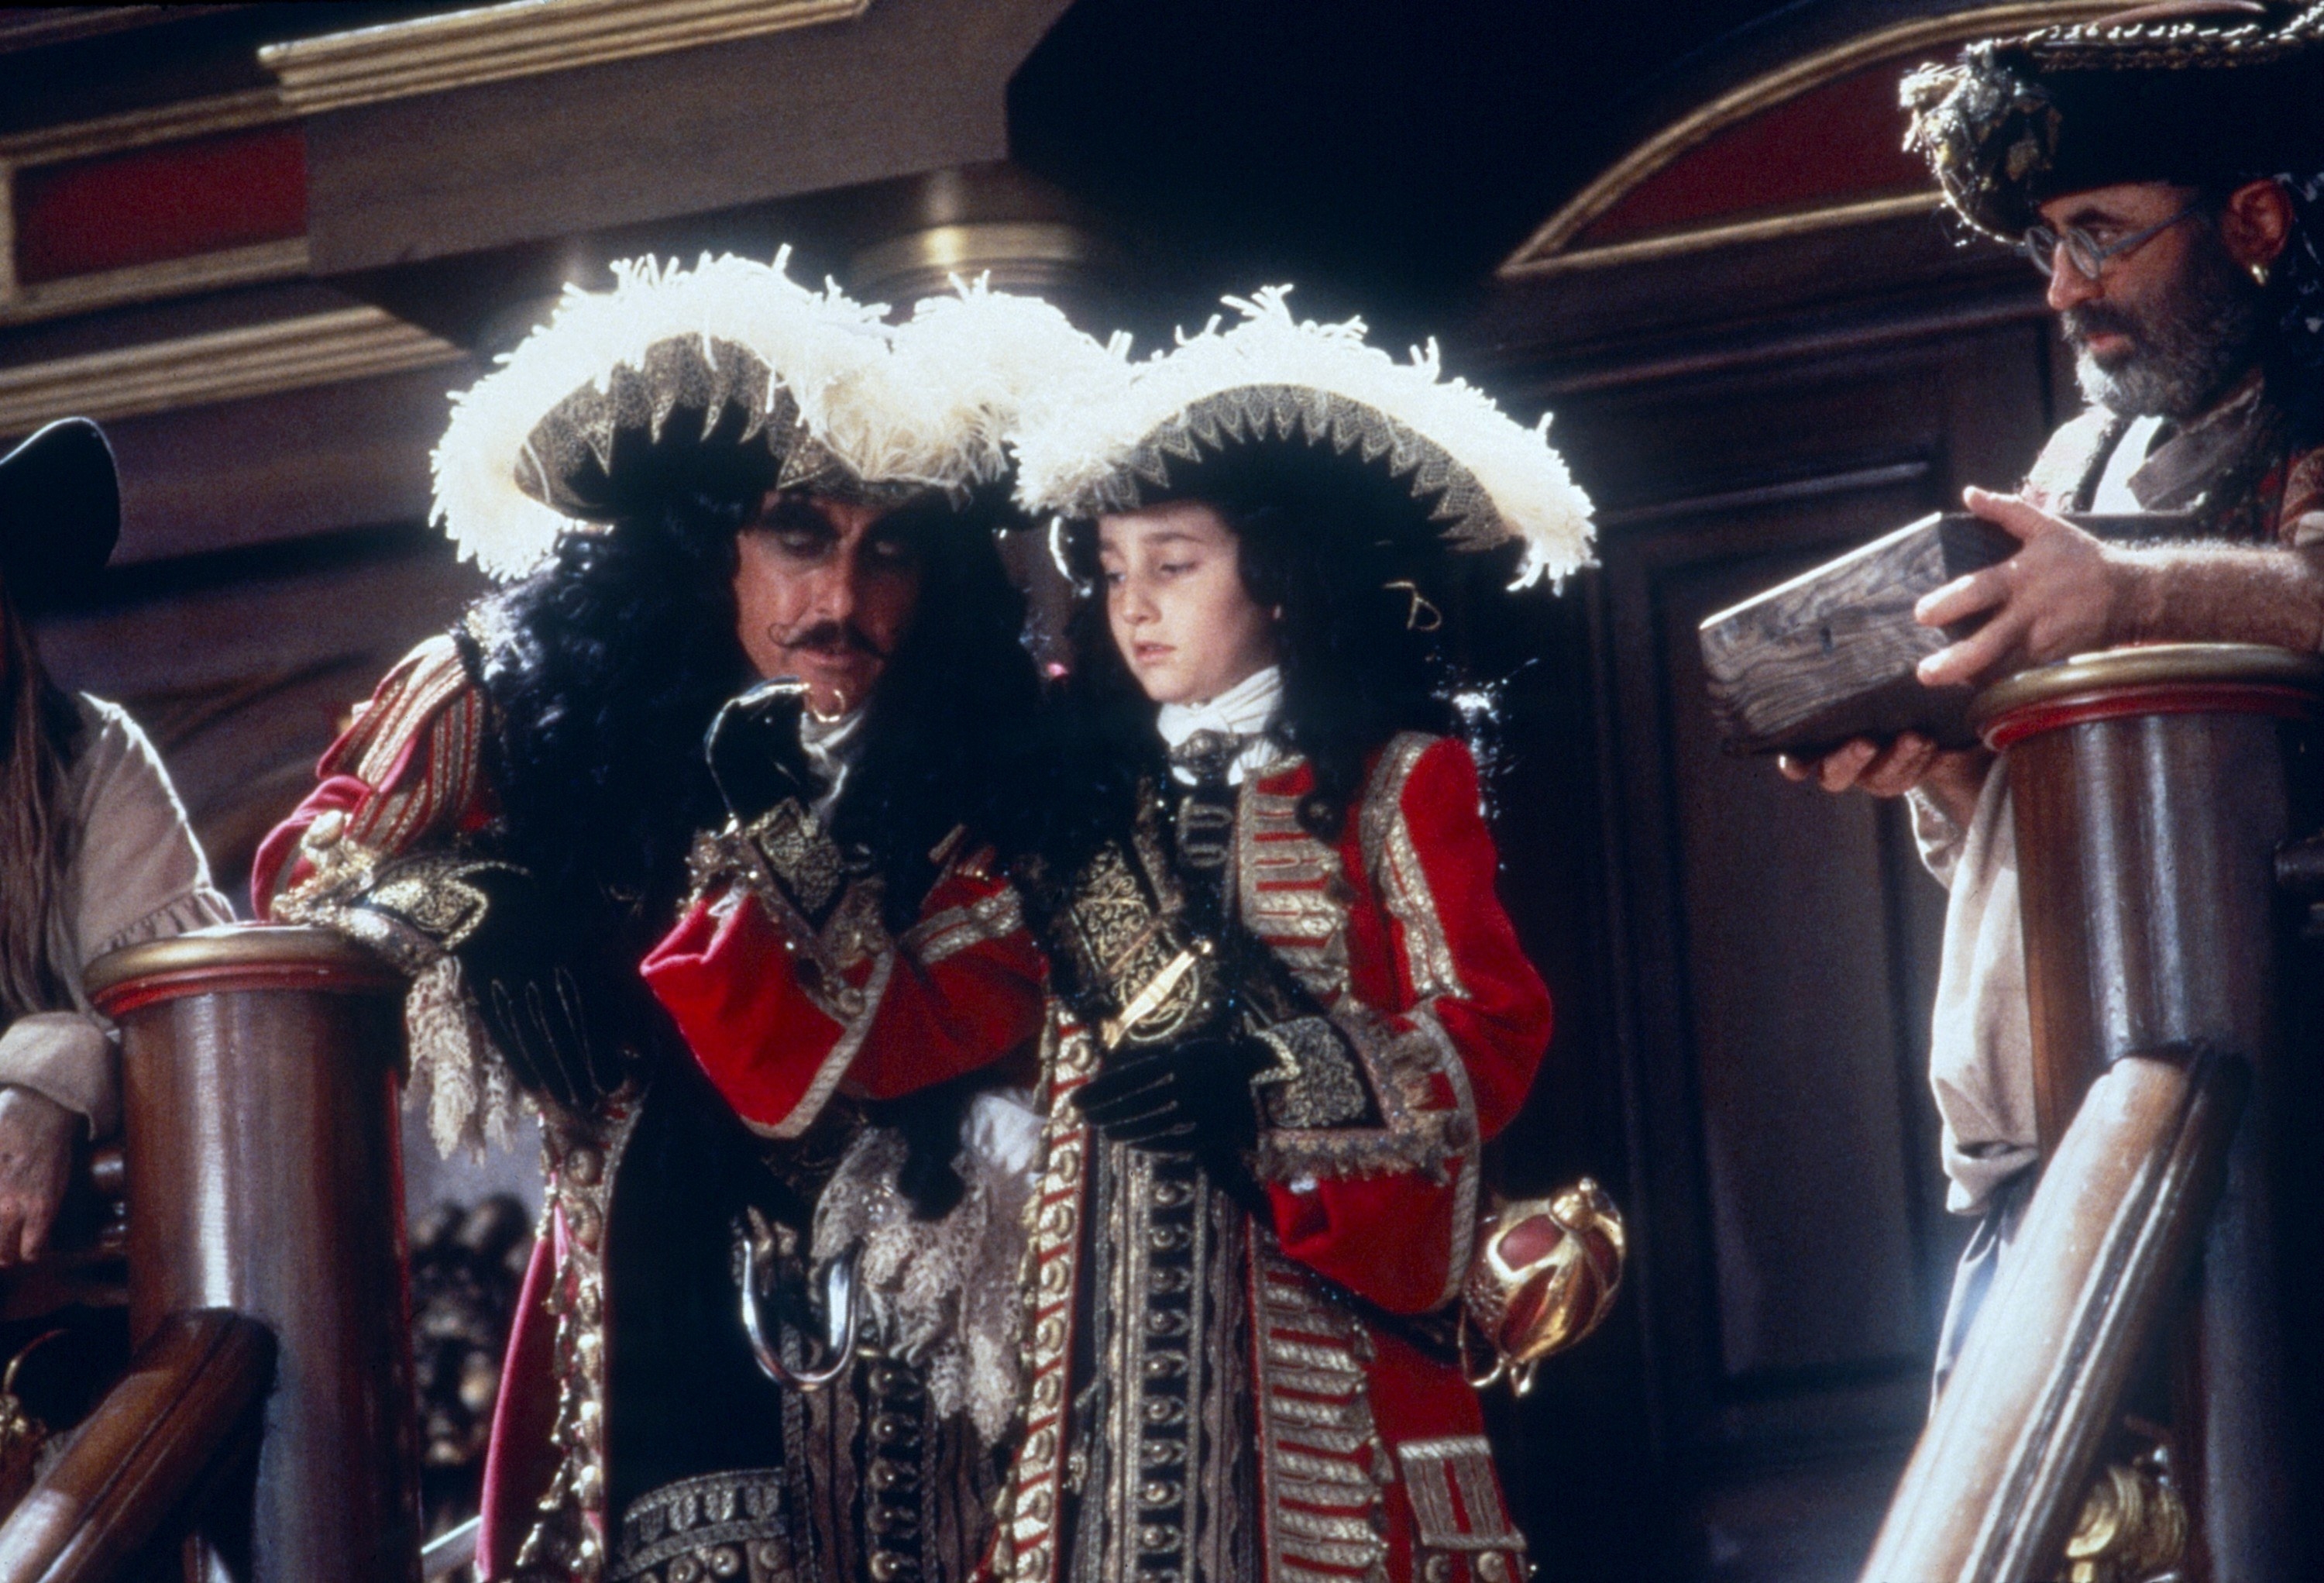 Dustin Hoffman and Charlie Korsmo dressed as Captain Hook